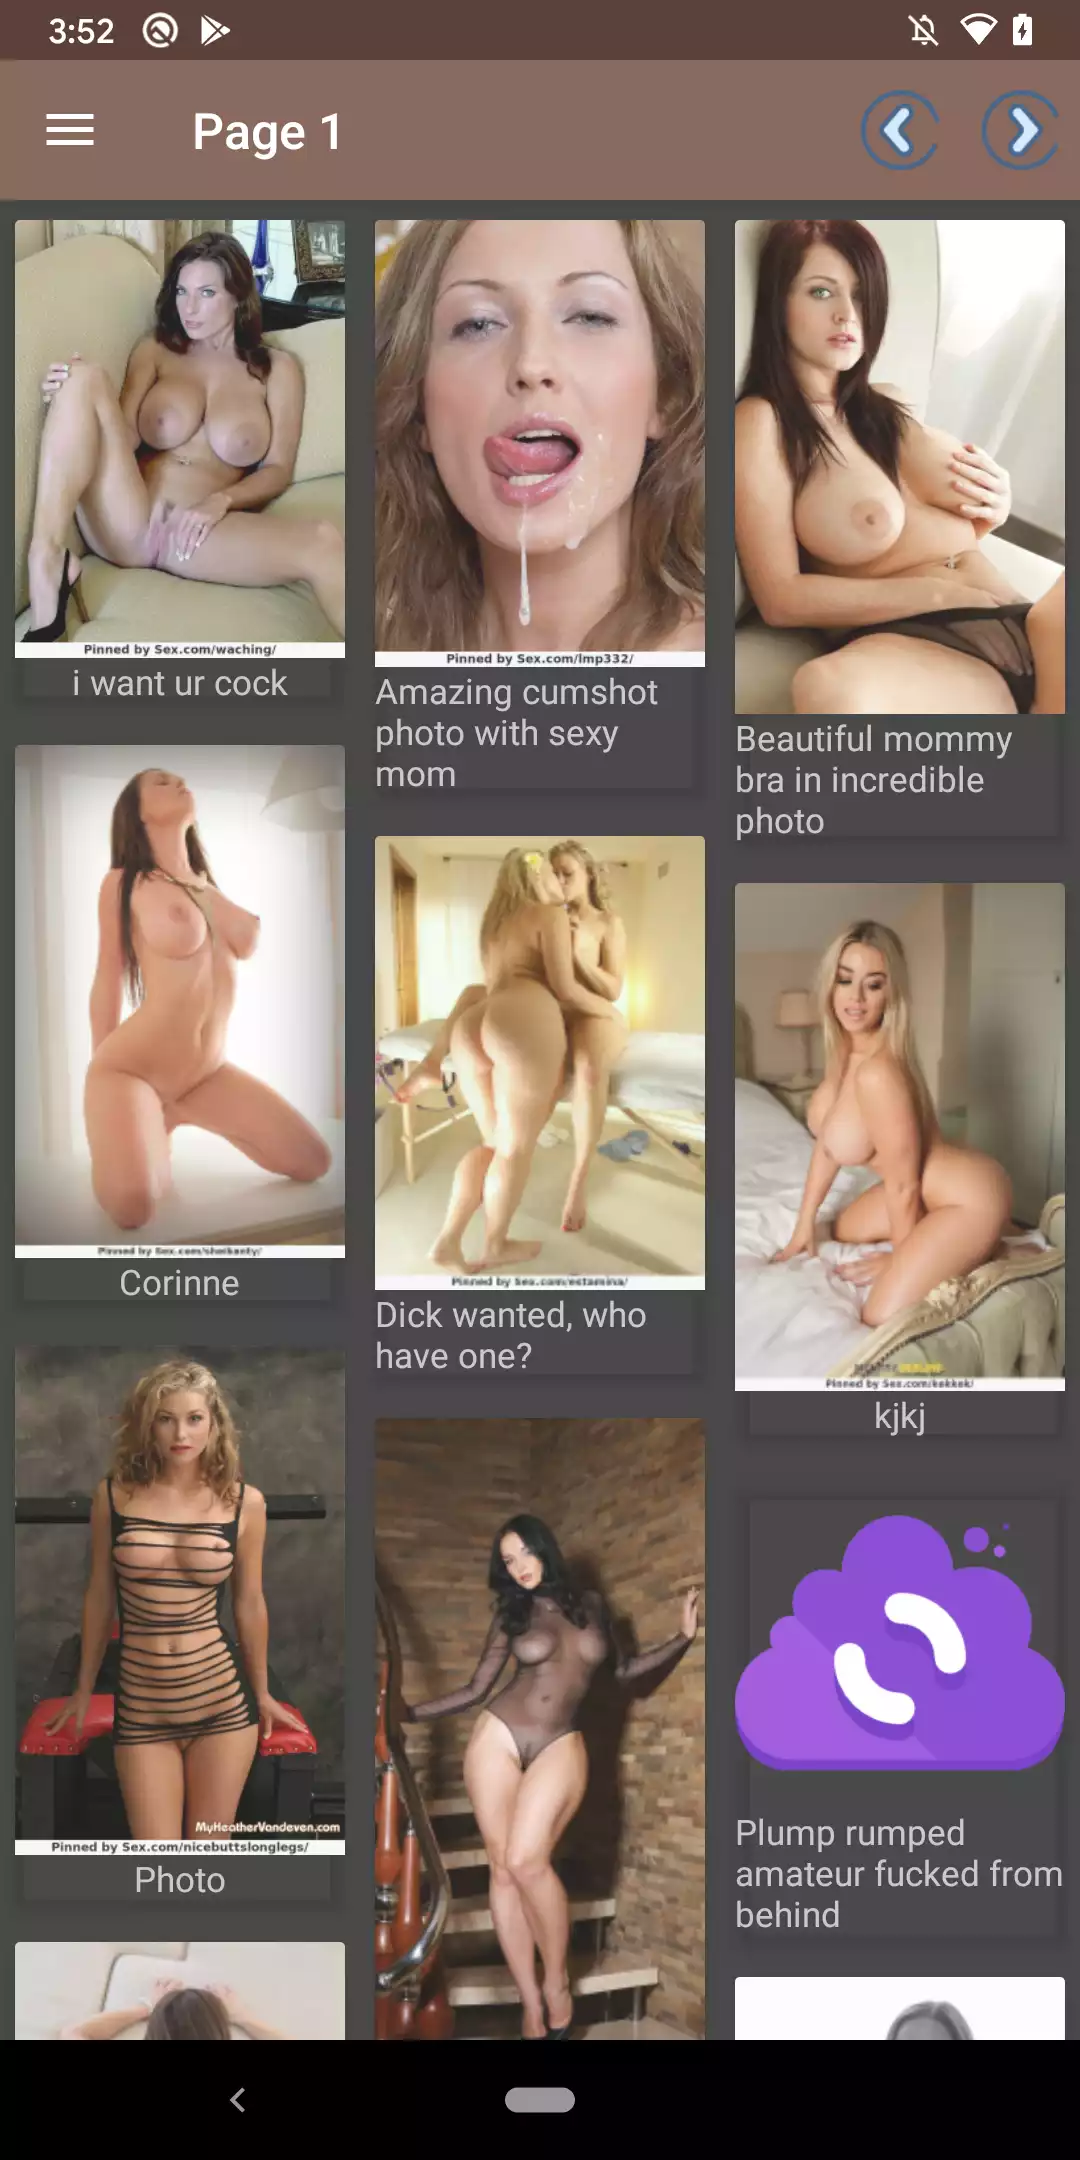 Hot Milf Pics futanari,pornstar,apps,download,cfnm,porn,sexy,android,app,wallpaper,photo,adult,henati,with,galleries,hentai,comics,hot,image,milf,pics,dicks,chicks